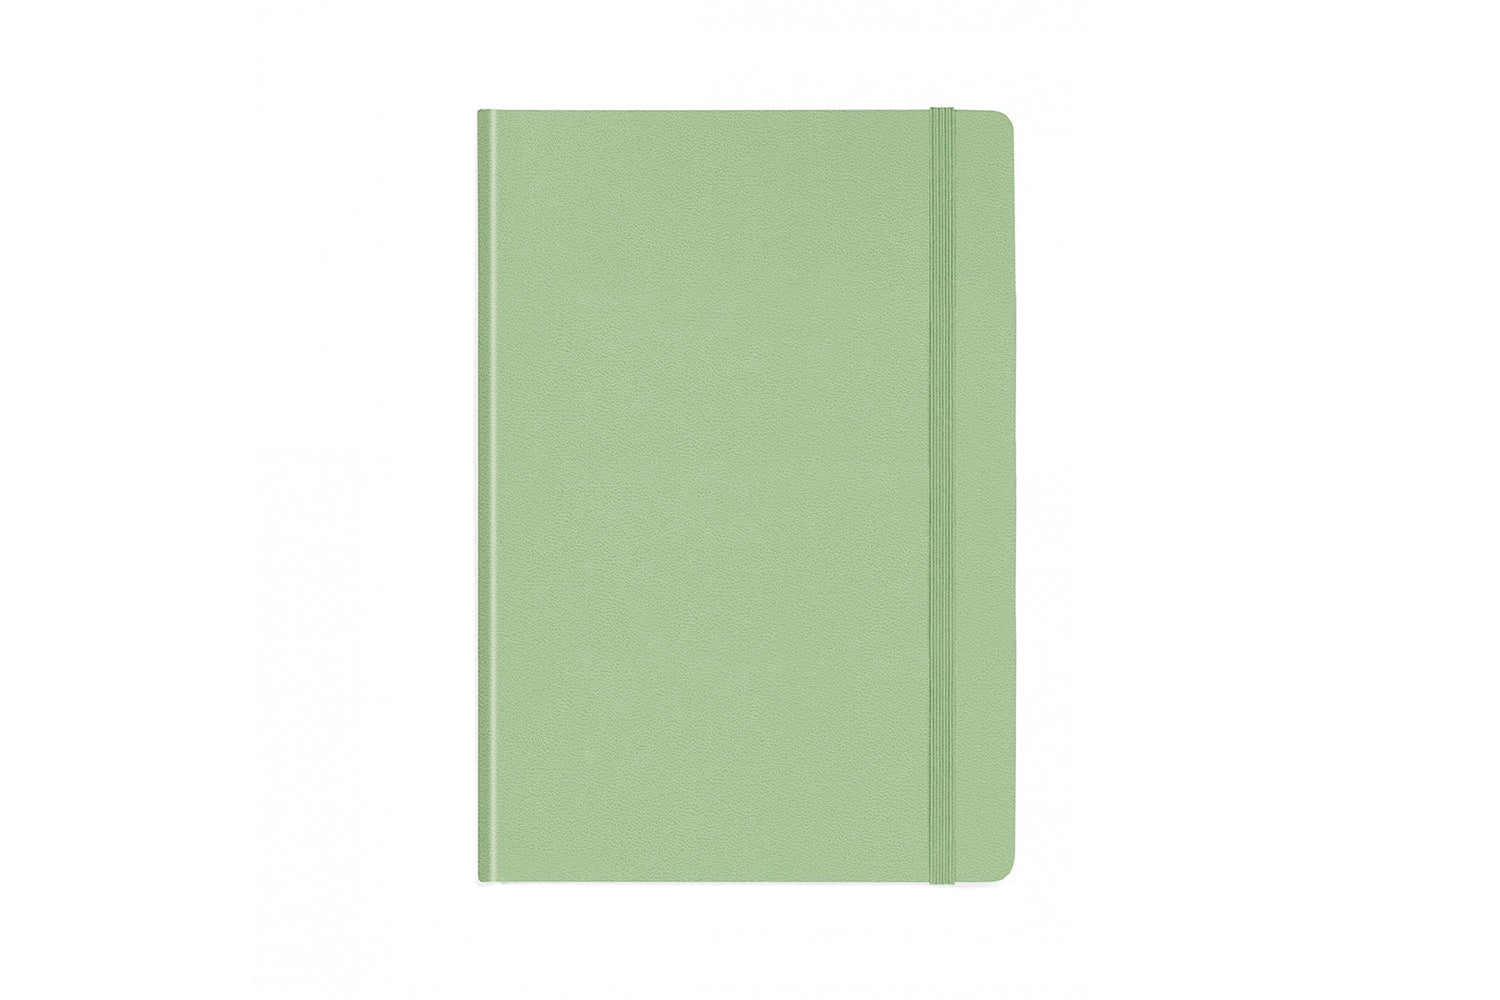 Leuchtturm Notebook Sage A5 | Ruled or Dot Grid